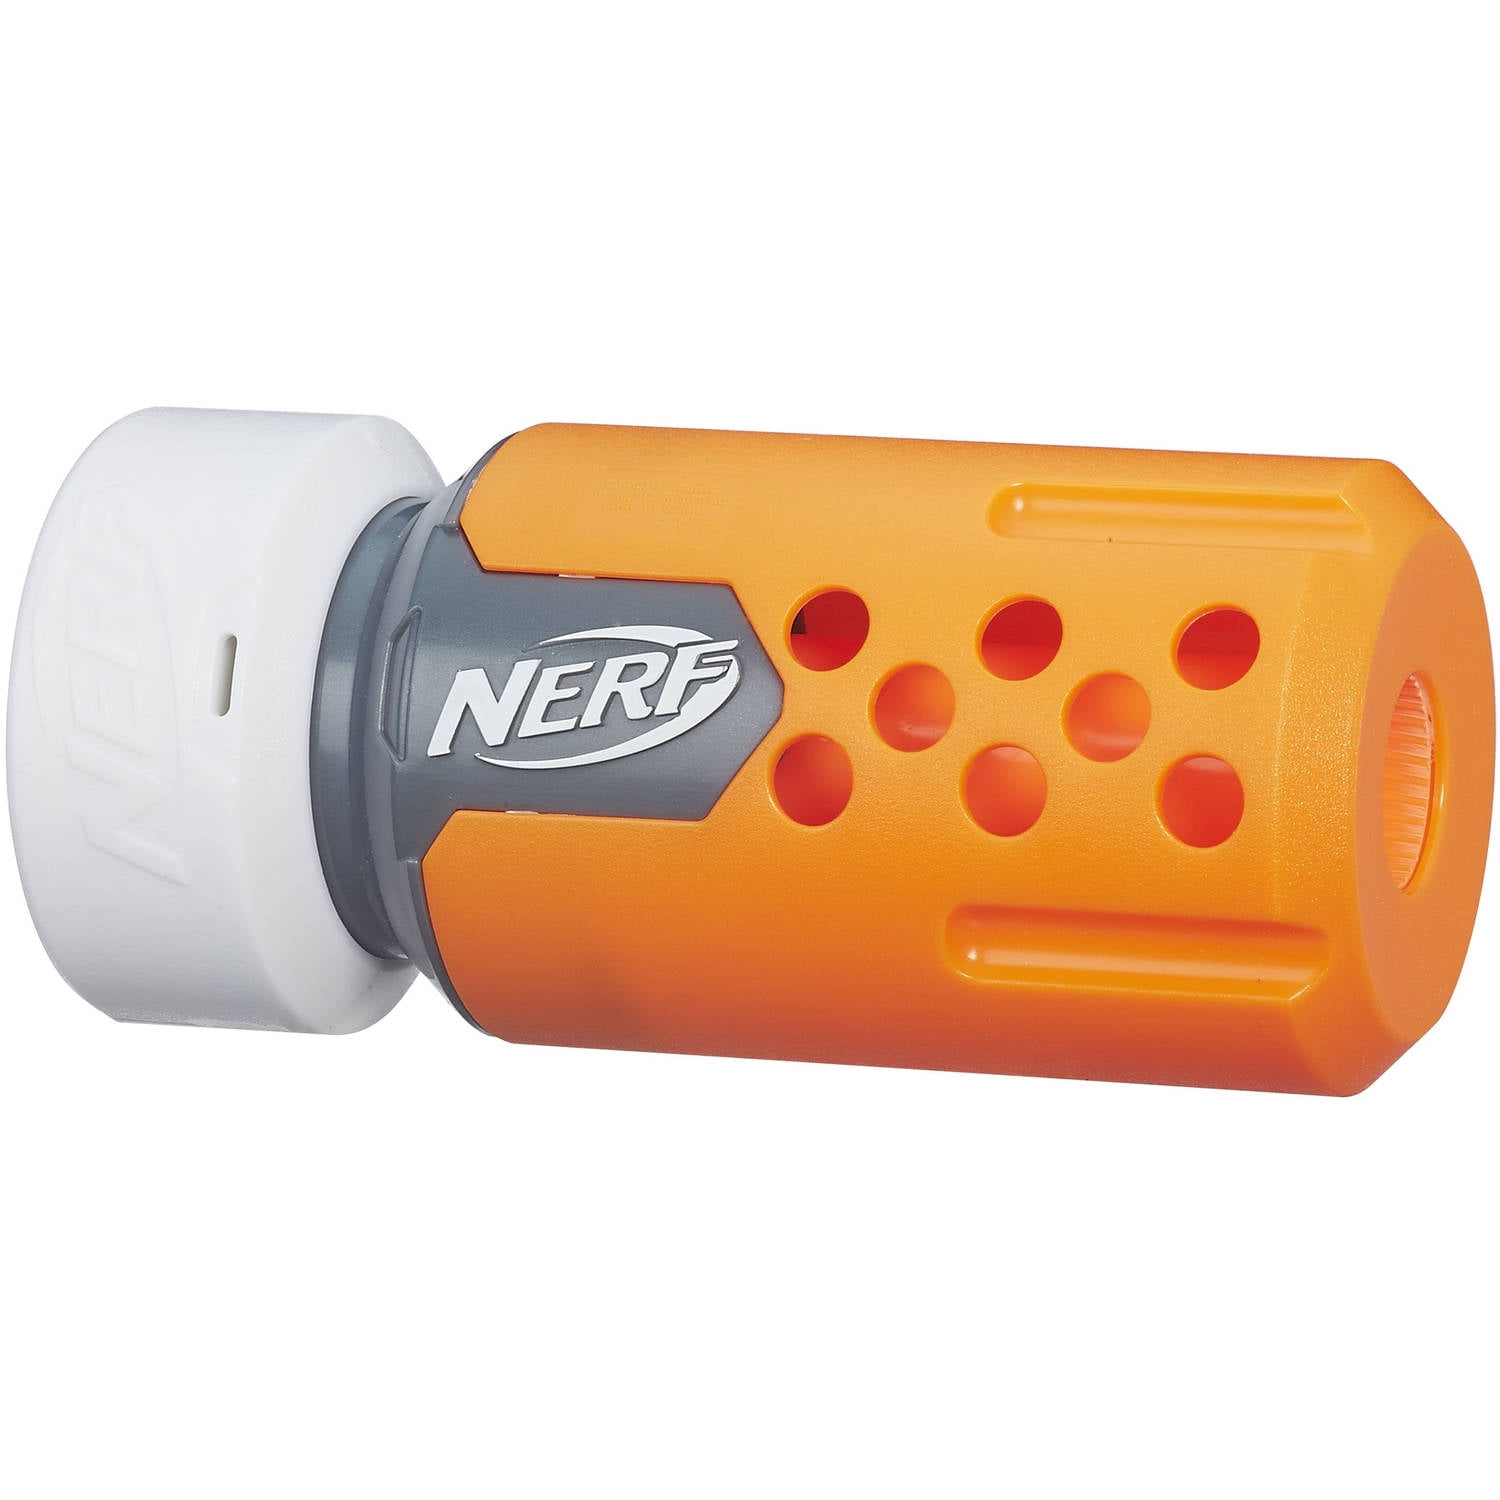 Brand New NERF N-Strike Modulus MEDIATOR BARREL Dart BLASTER 